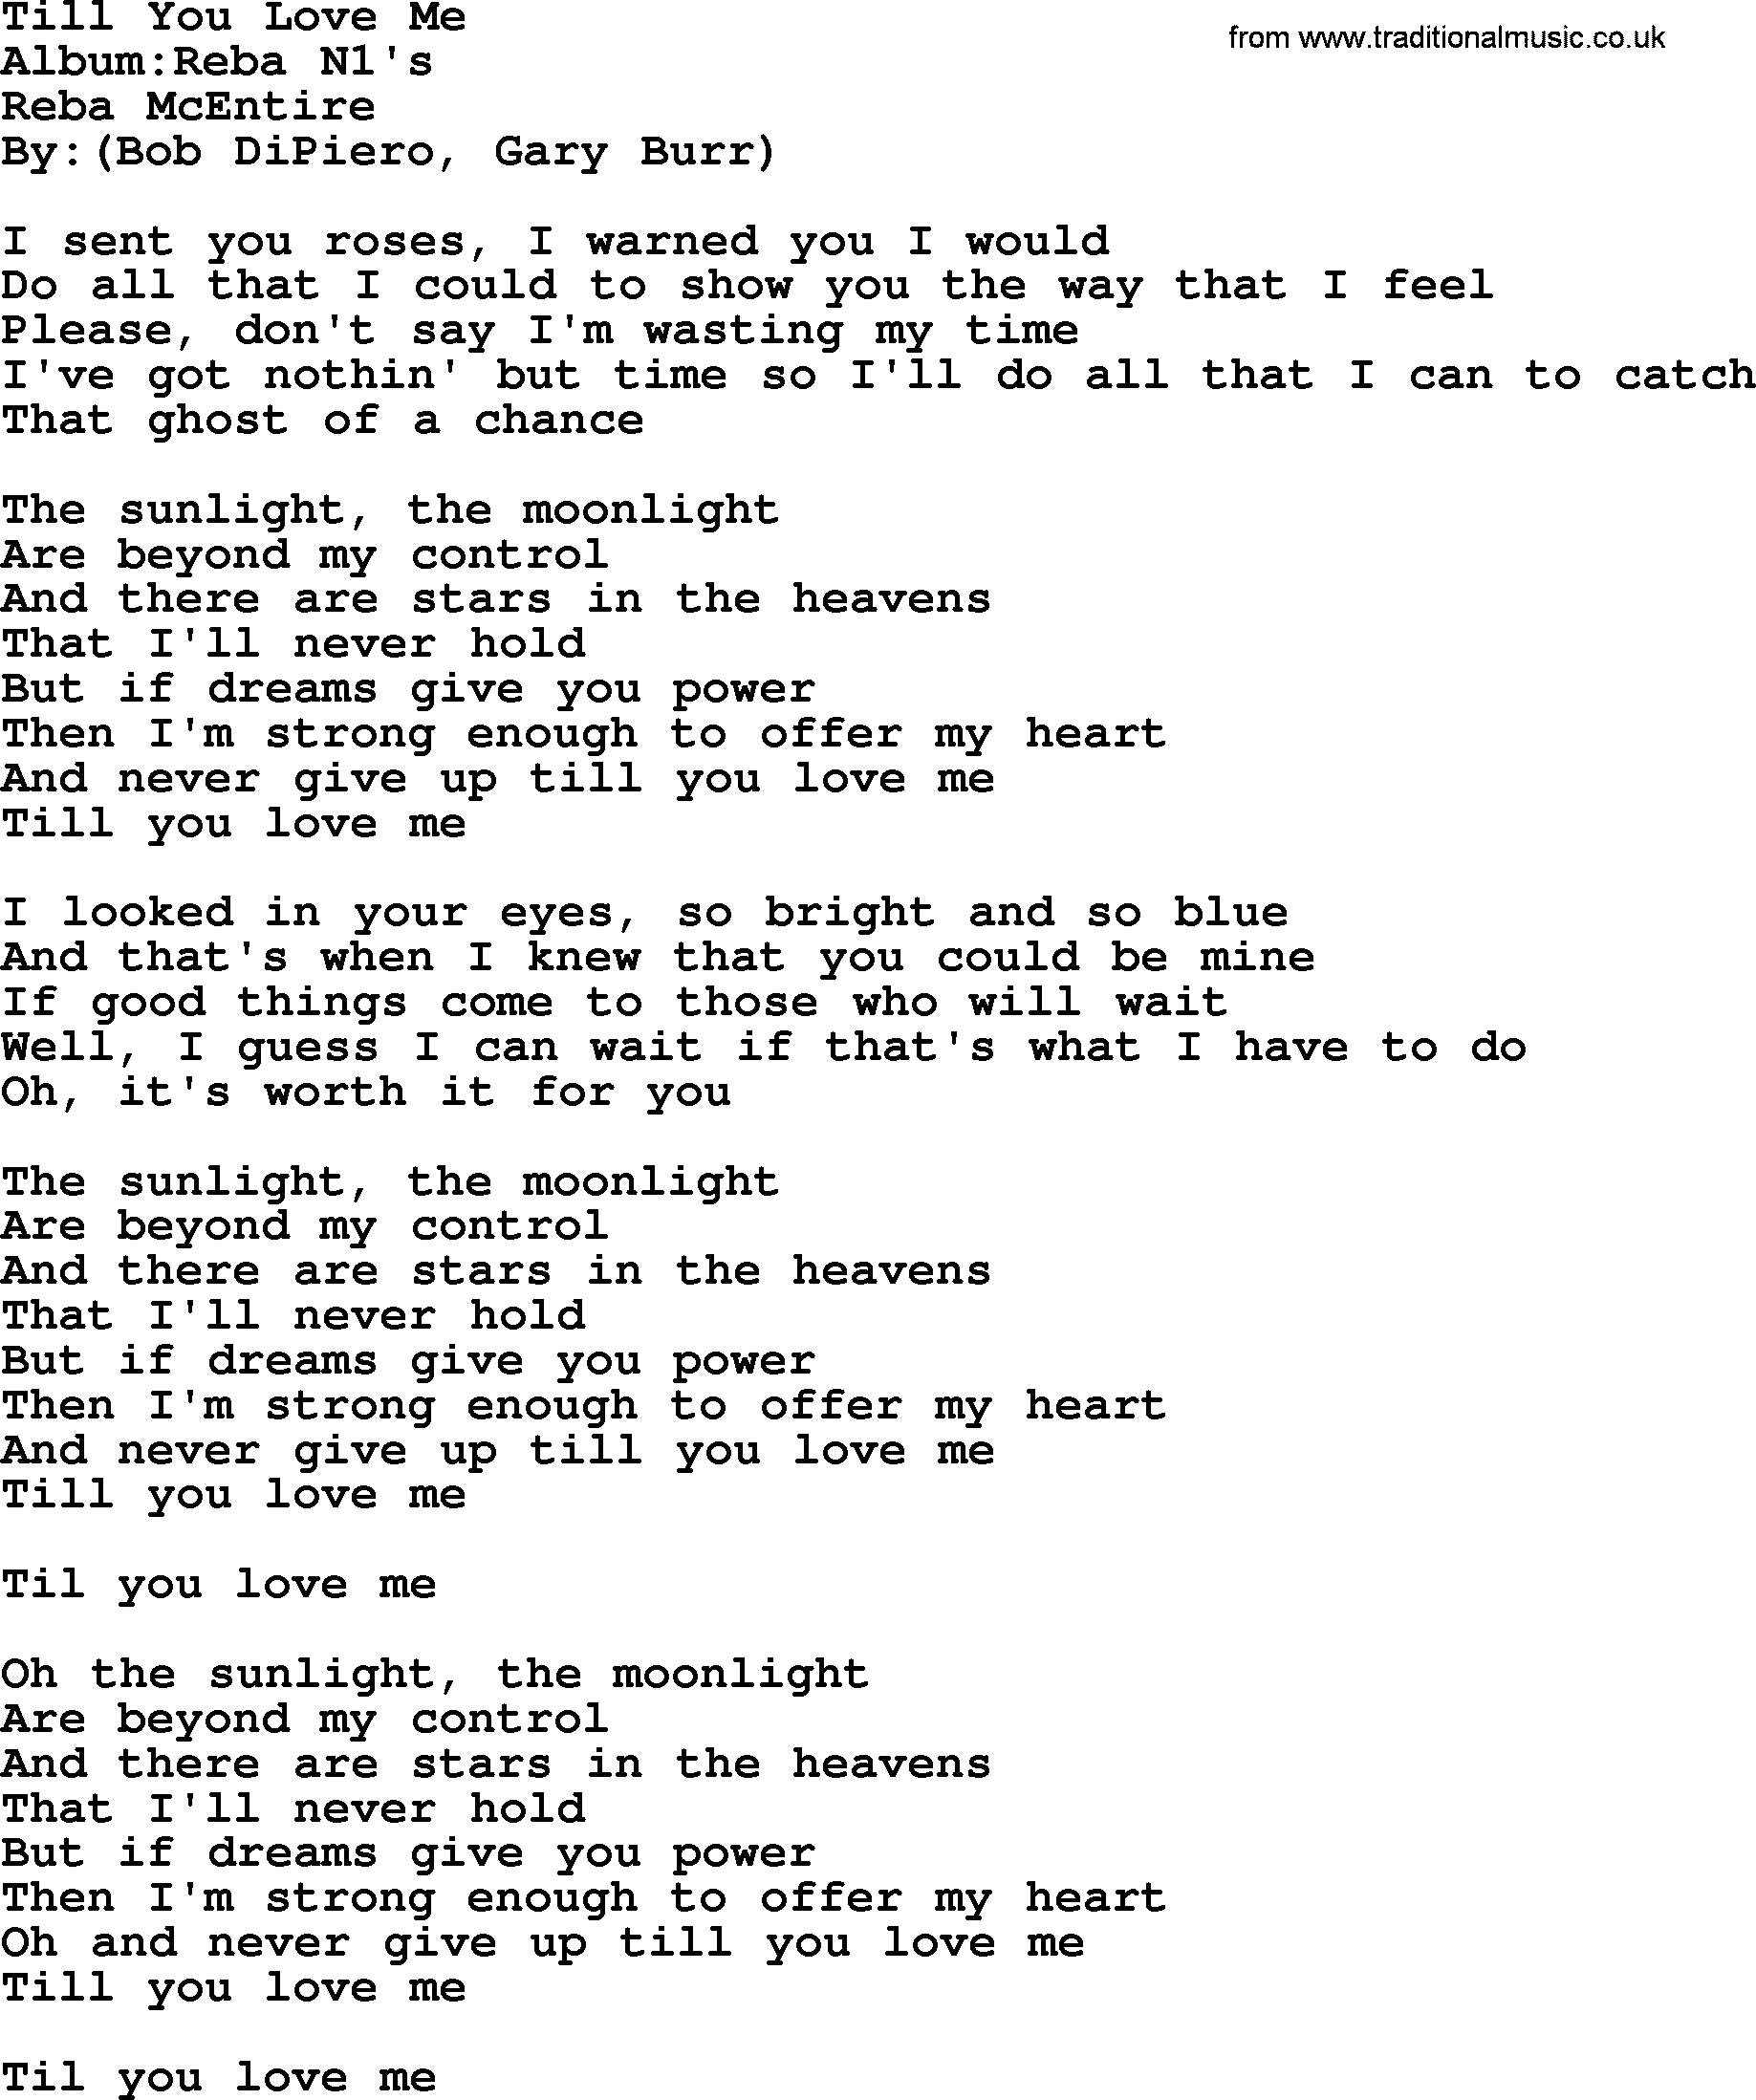 Reba McEntire song: Till You Love Me lyrics